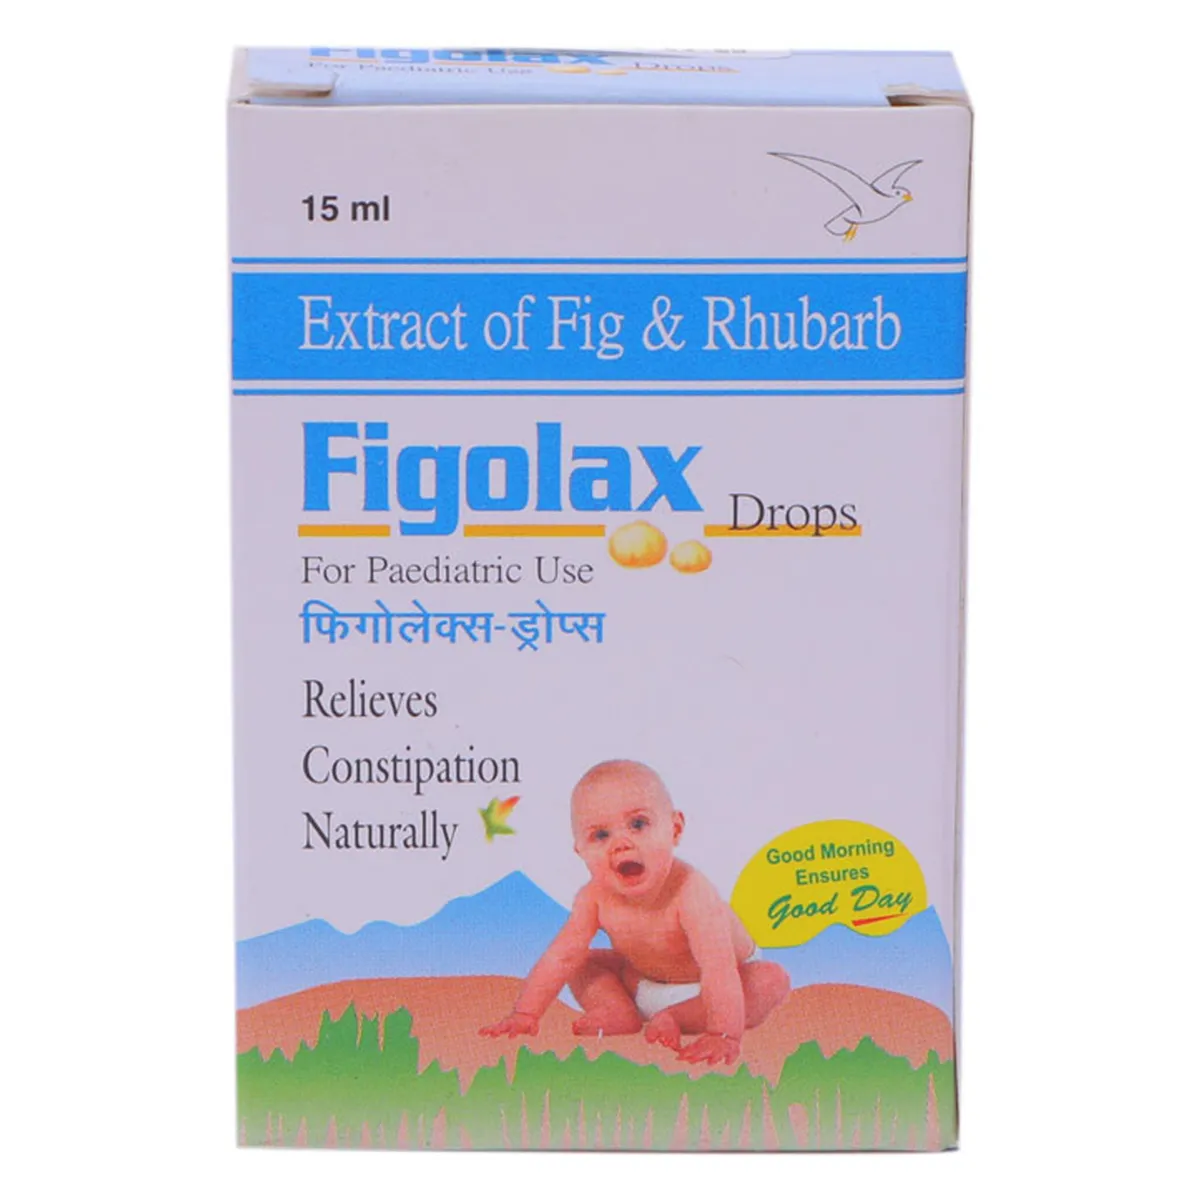 Figolax Drop